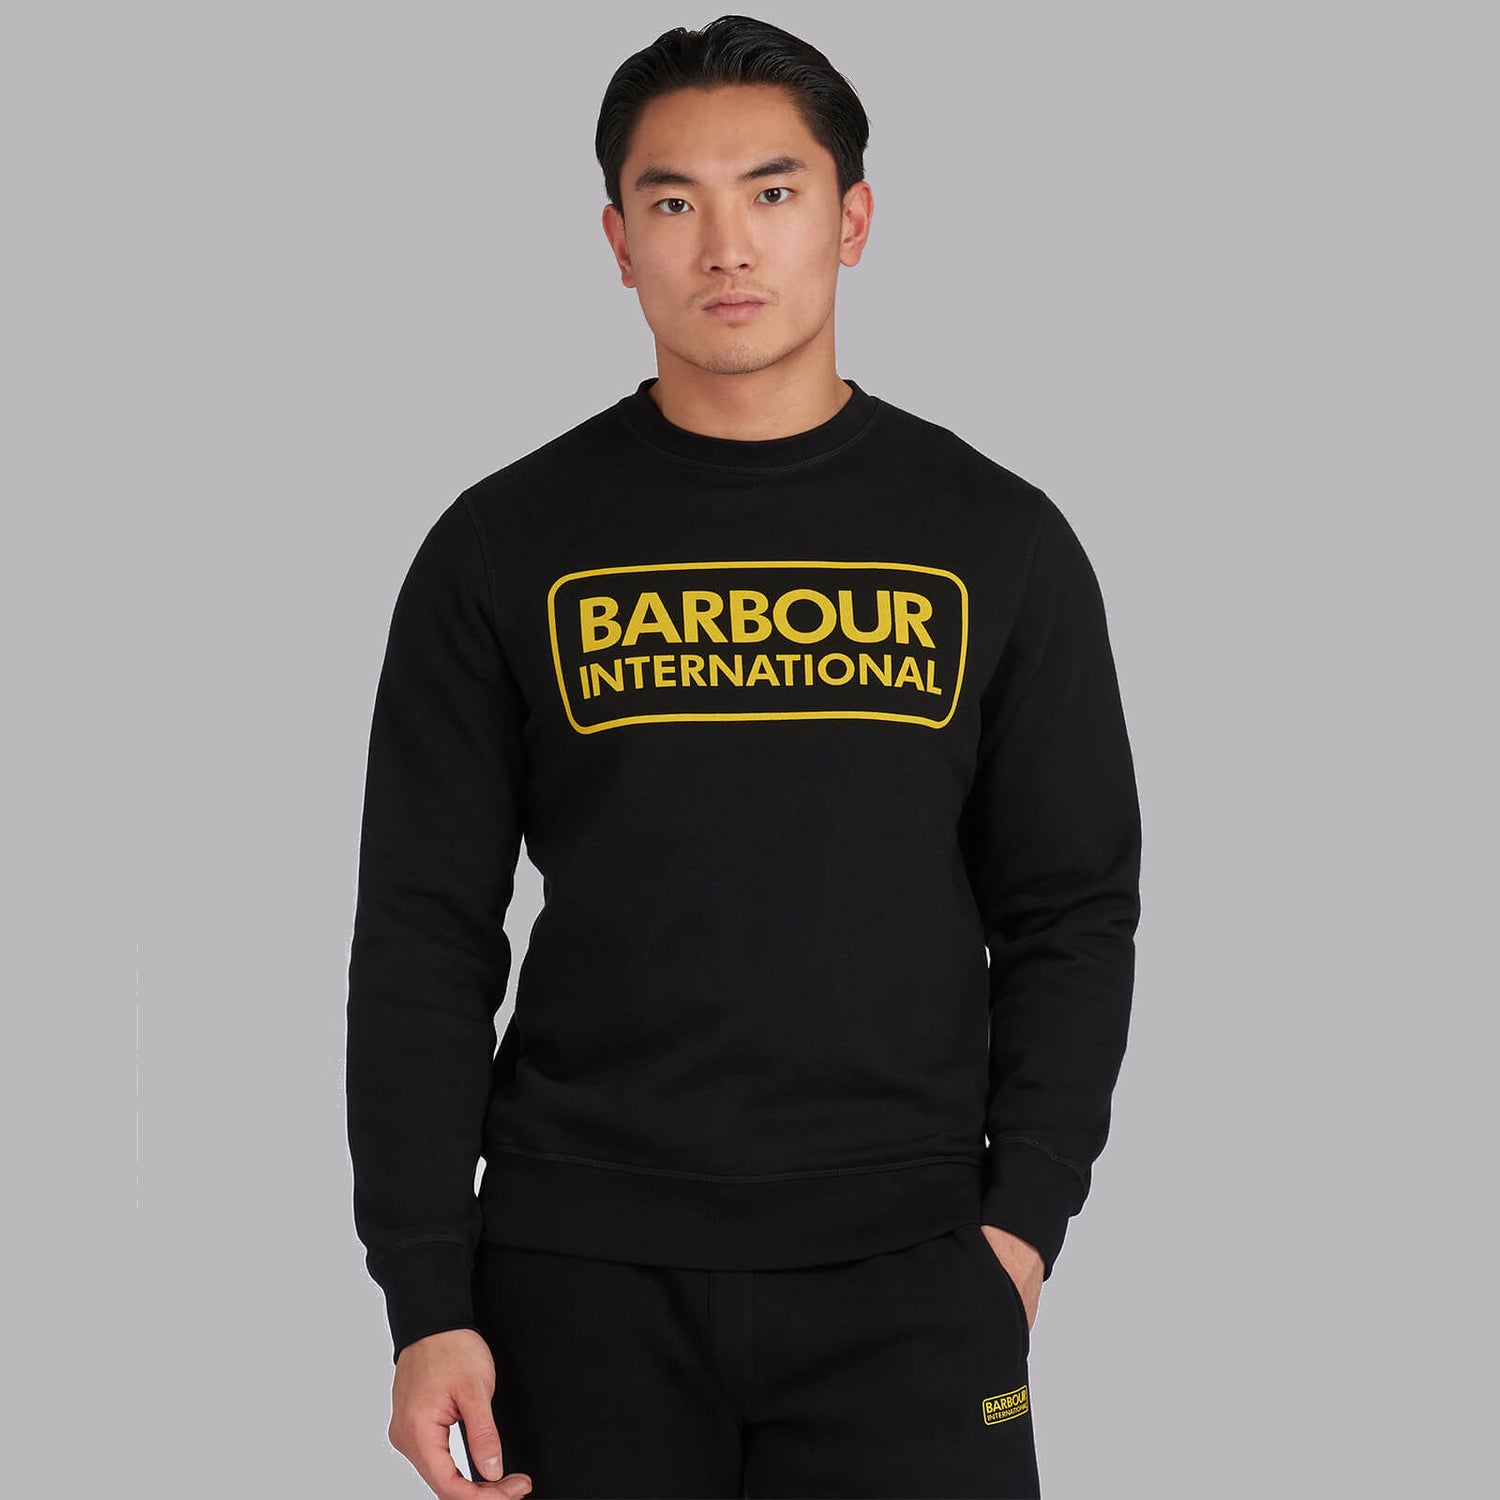 Barbour International Men's Large Logo Sweatshirt - Black - S